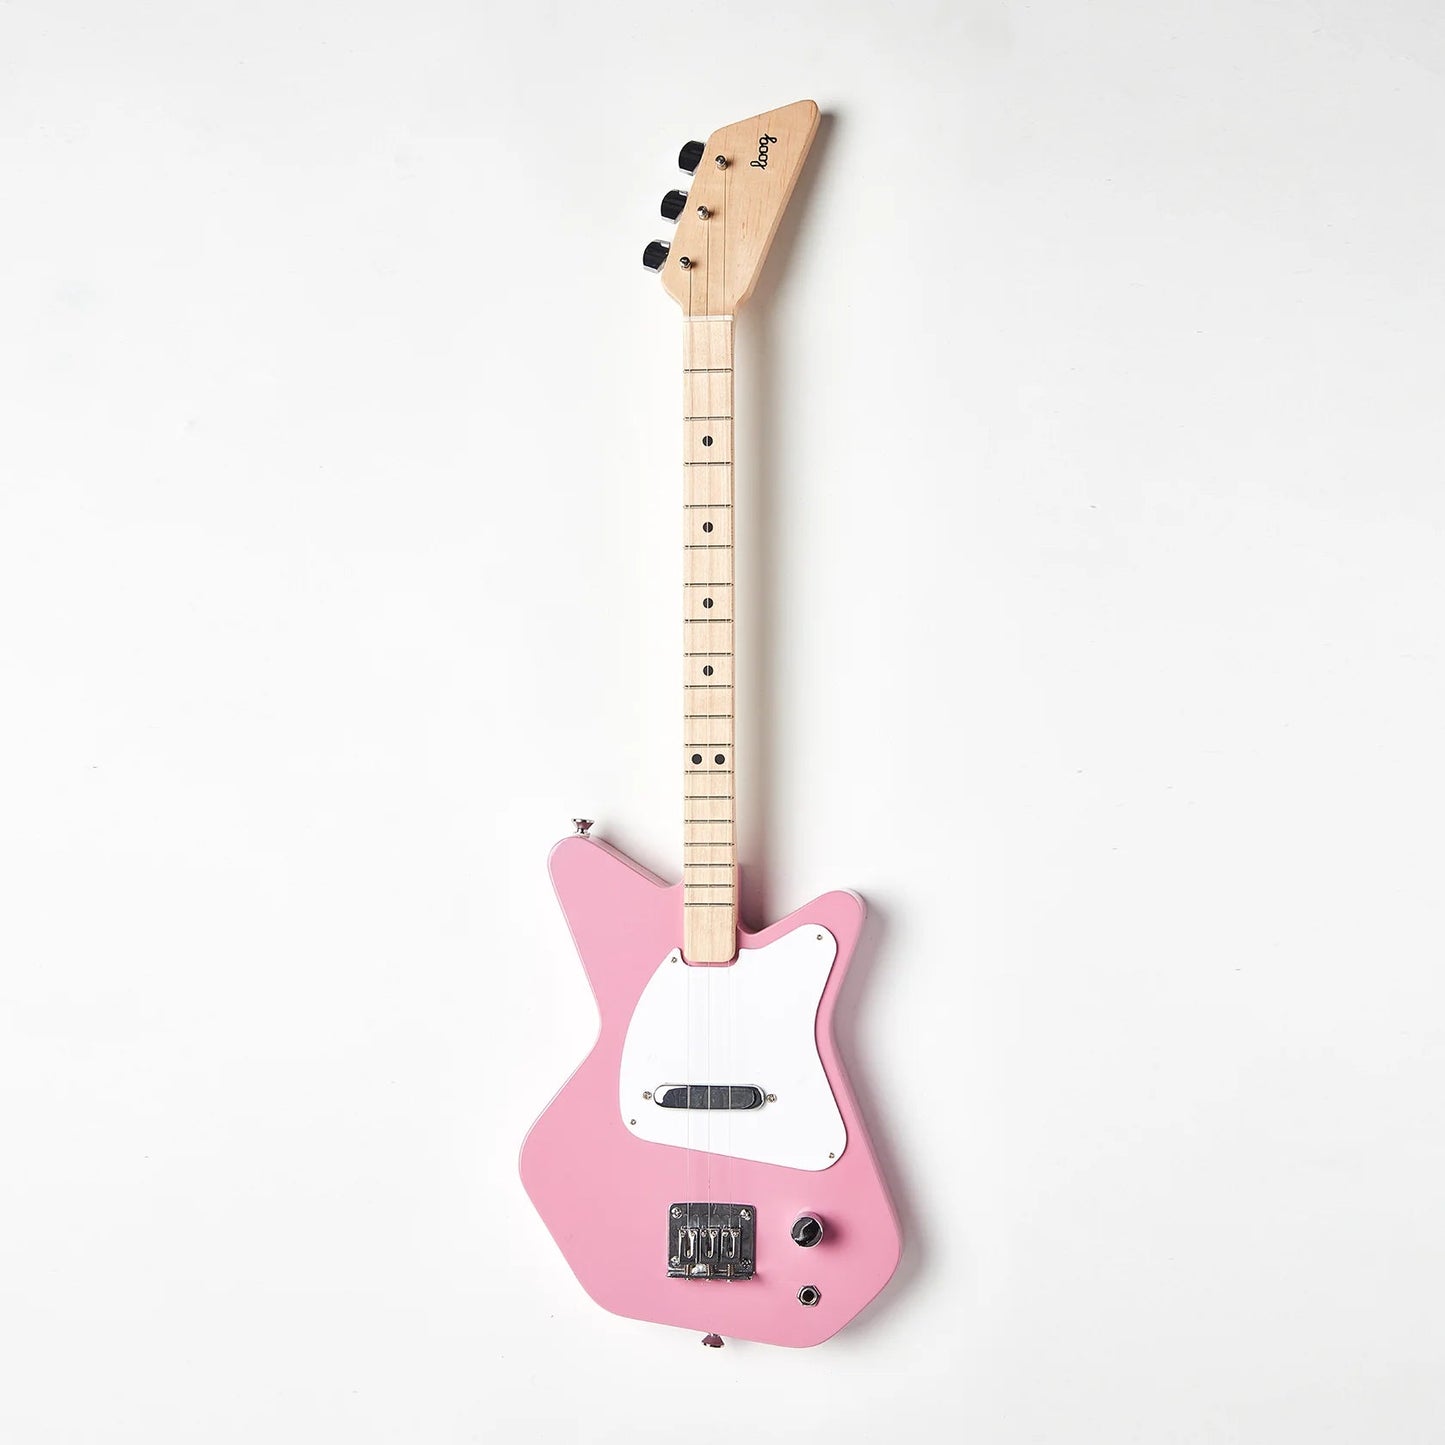 Loog Pro Electric Guitar Guitars Pink 